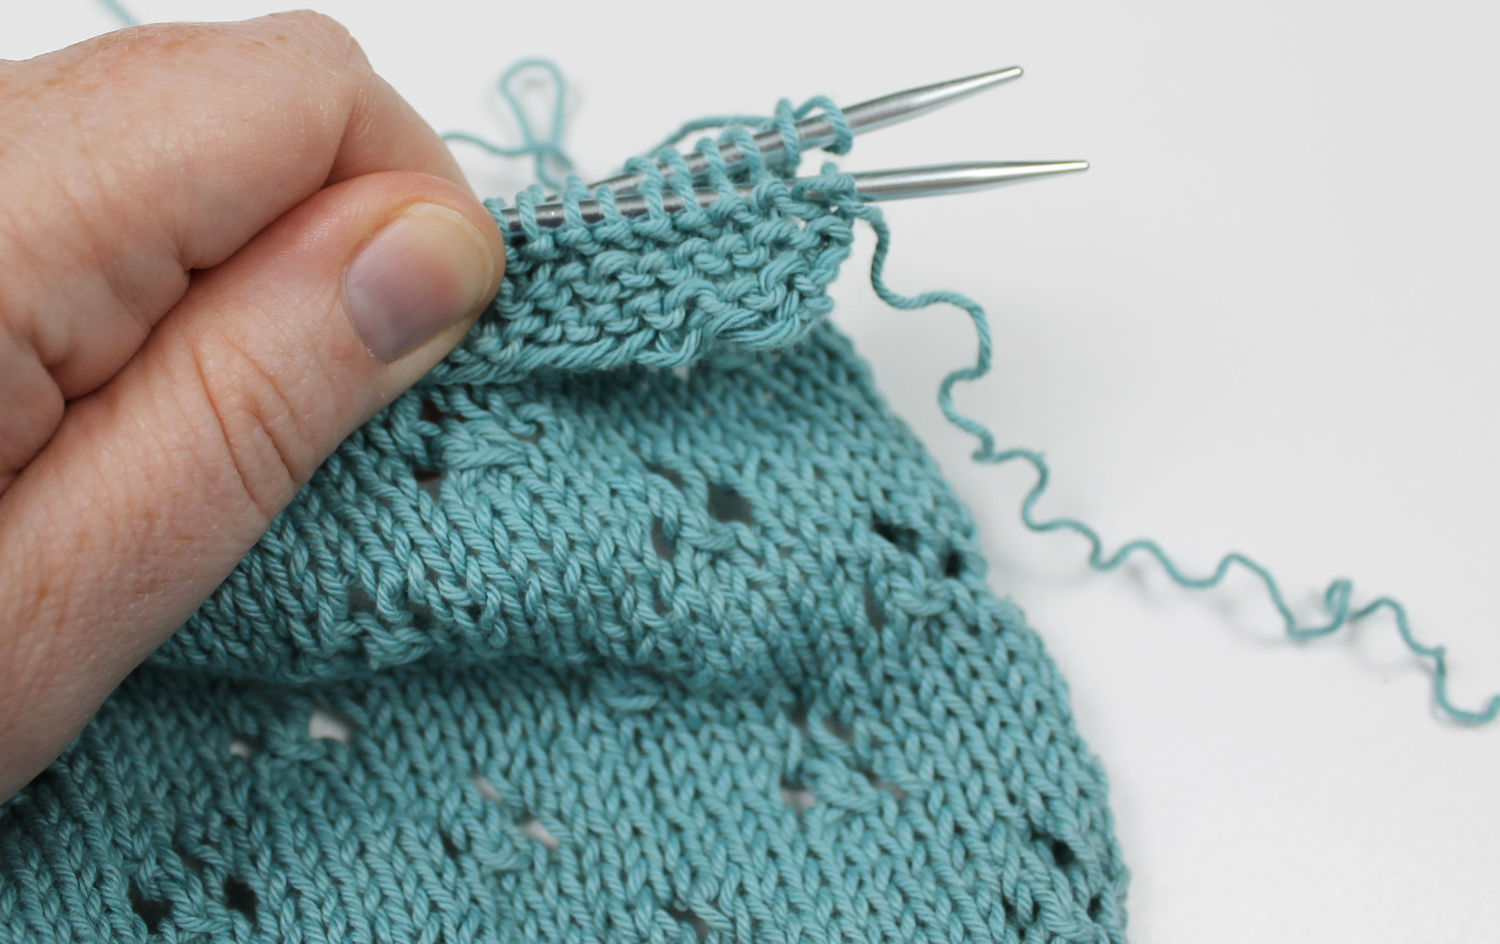 Knitting the three-needle join